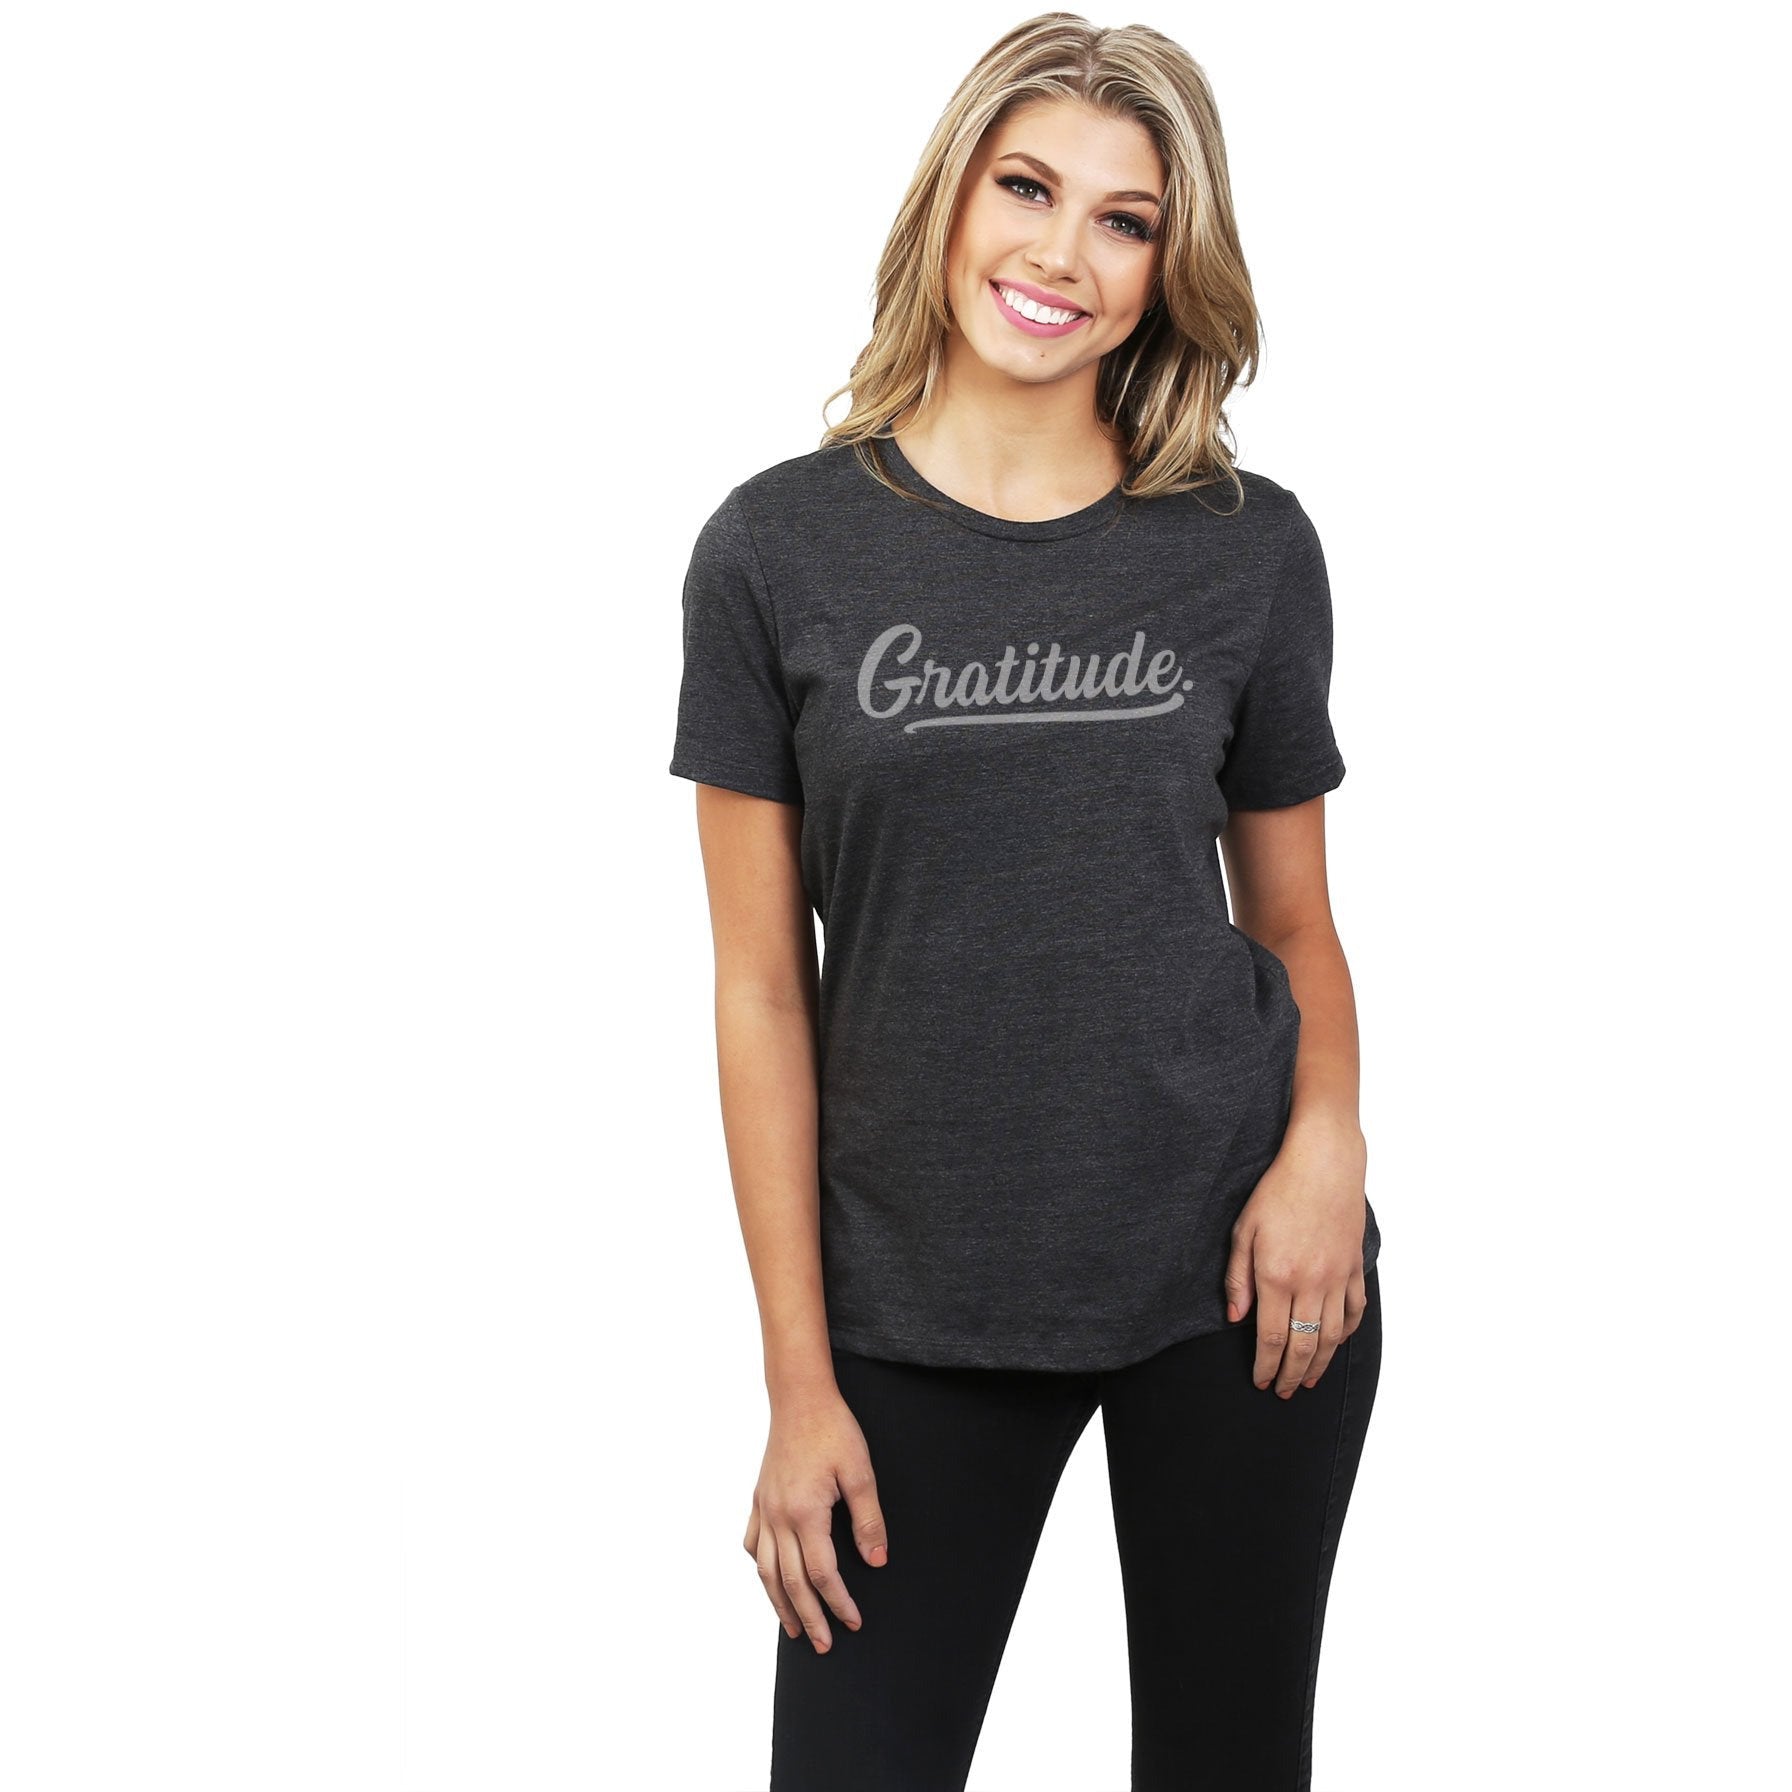 Gratitude Women's Relaxed Crewneck T-Shirt Top Tee Charcoal Grey
